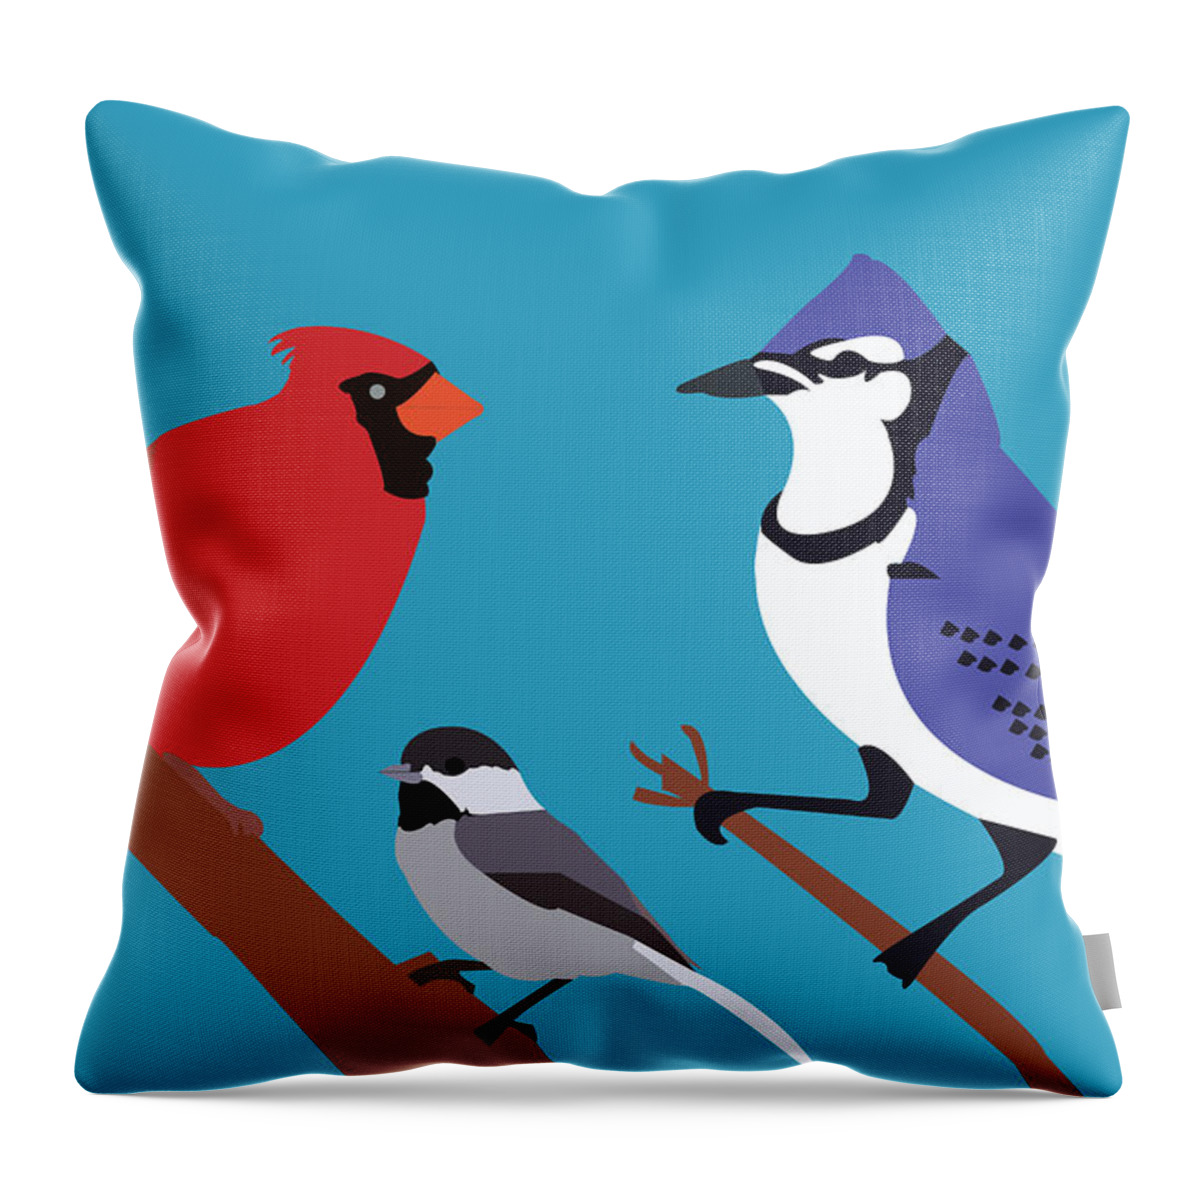 Birds Throw Pillow featuring the digital art Backyard birds by Caroline Elgin